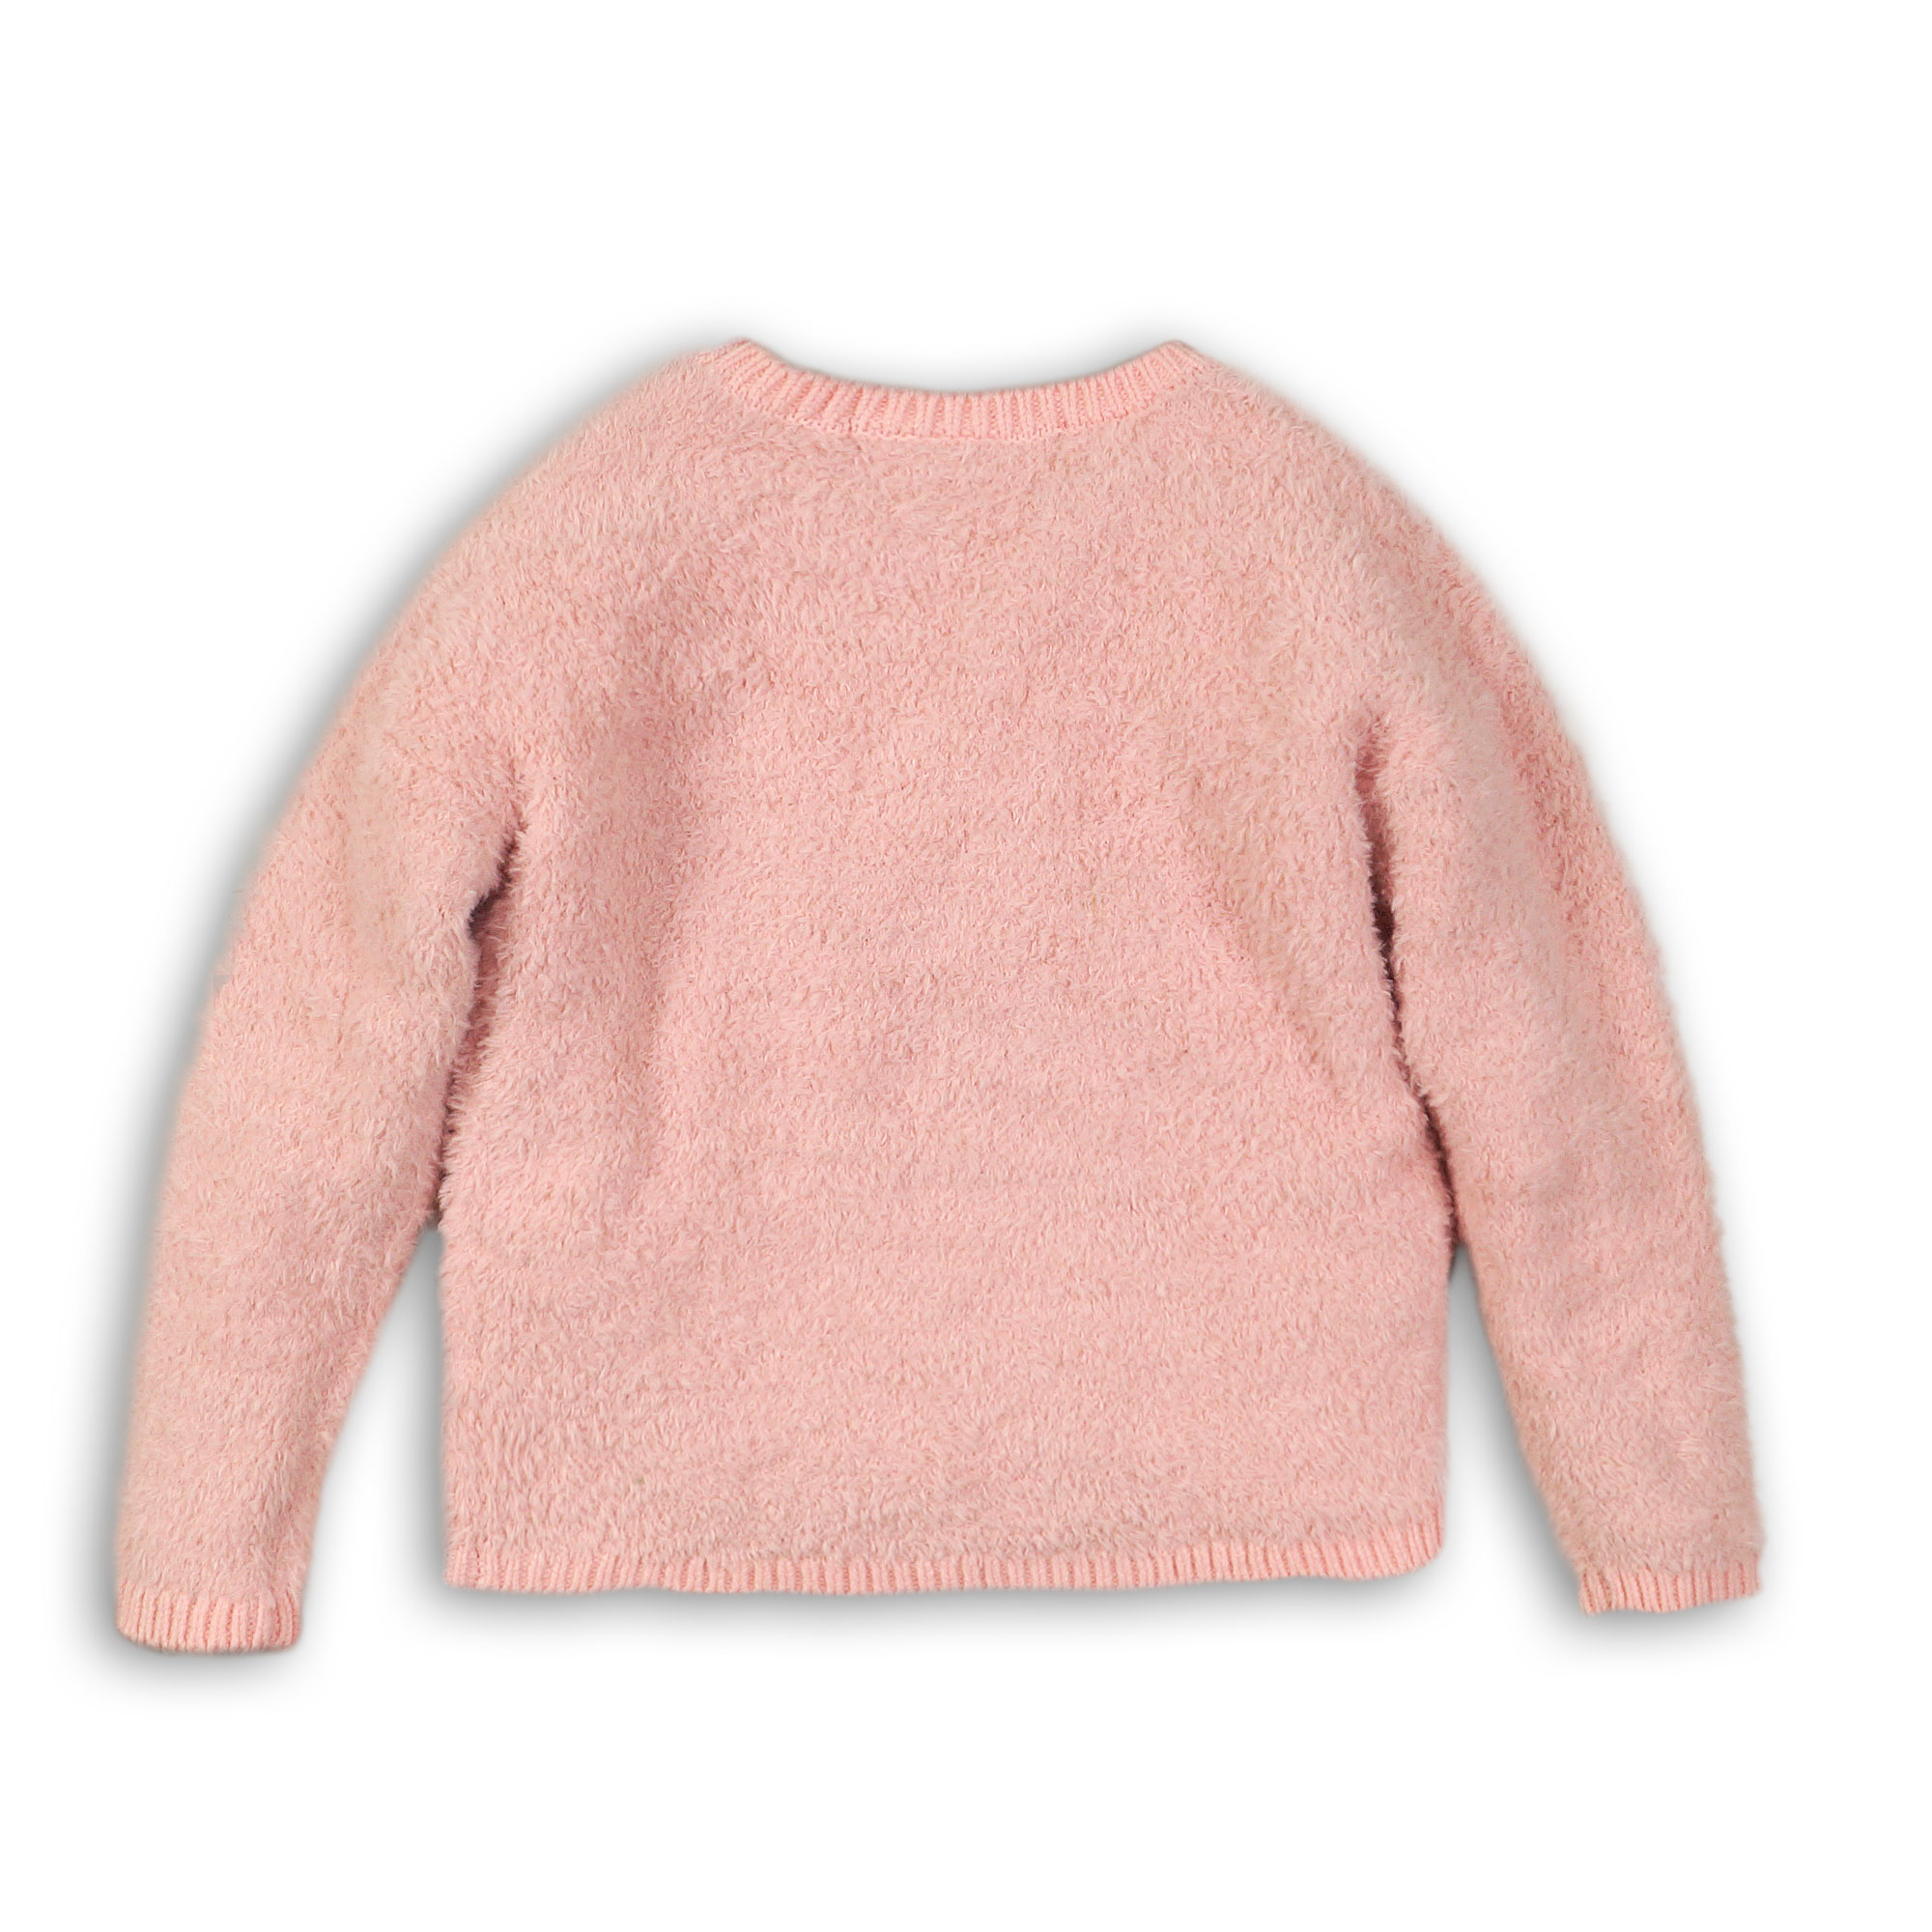 Džemper za devojčicu